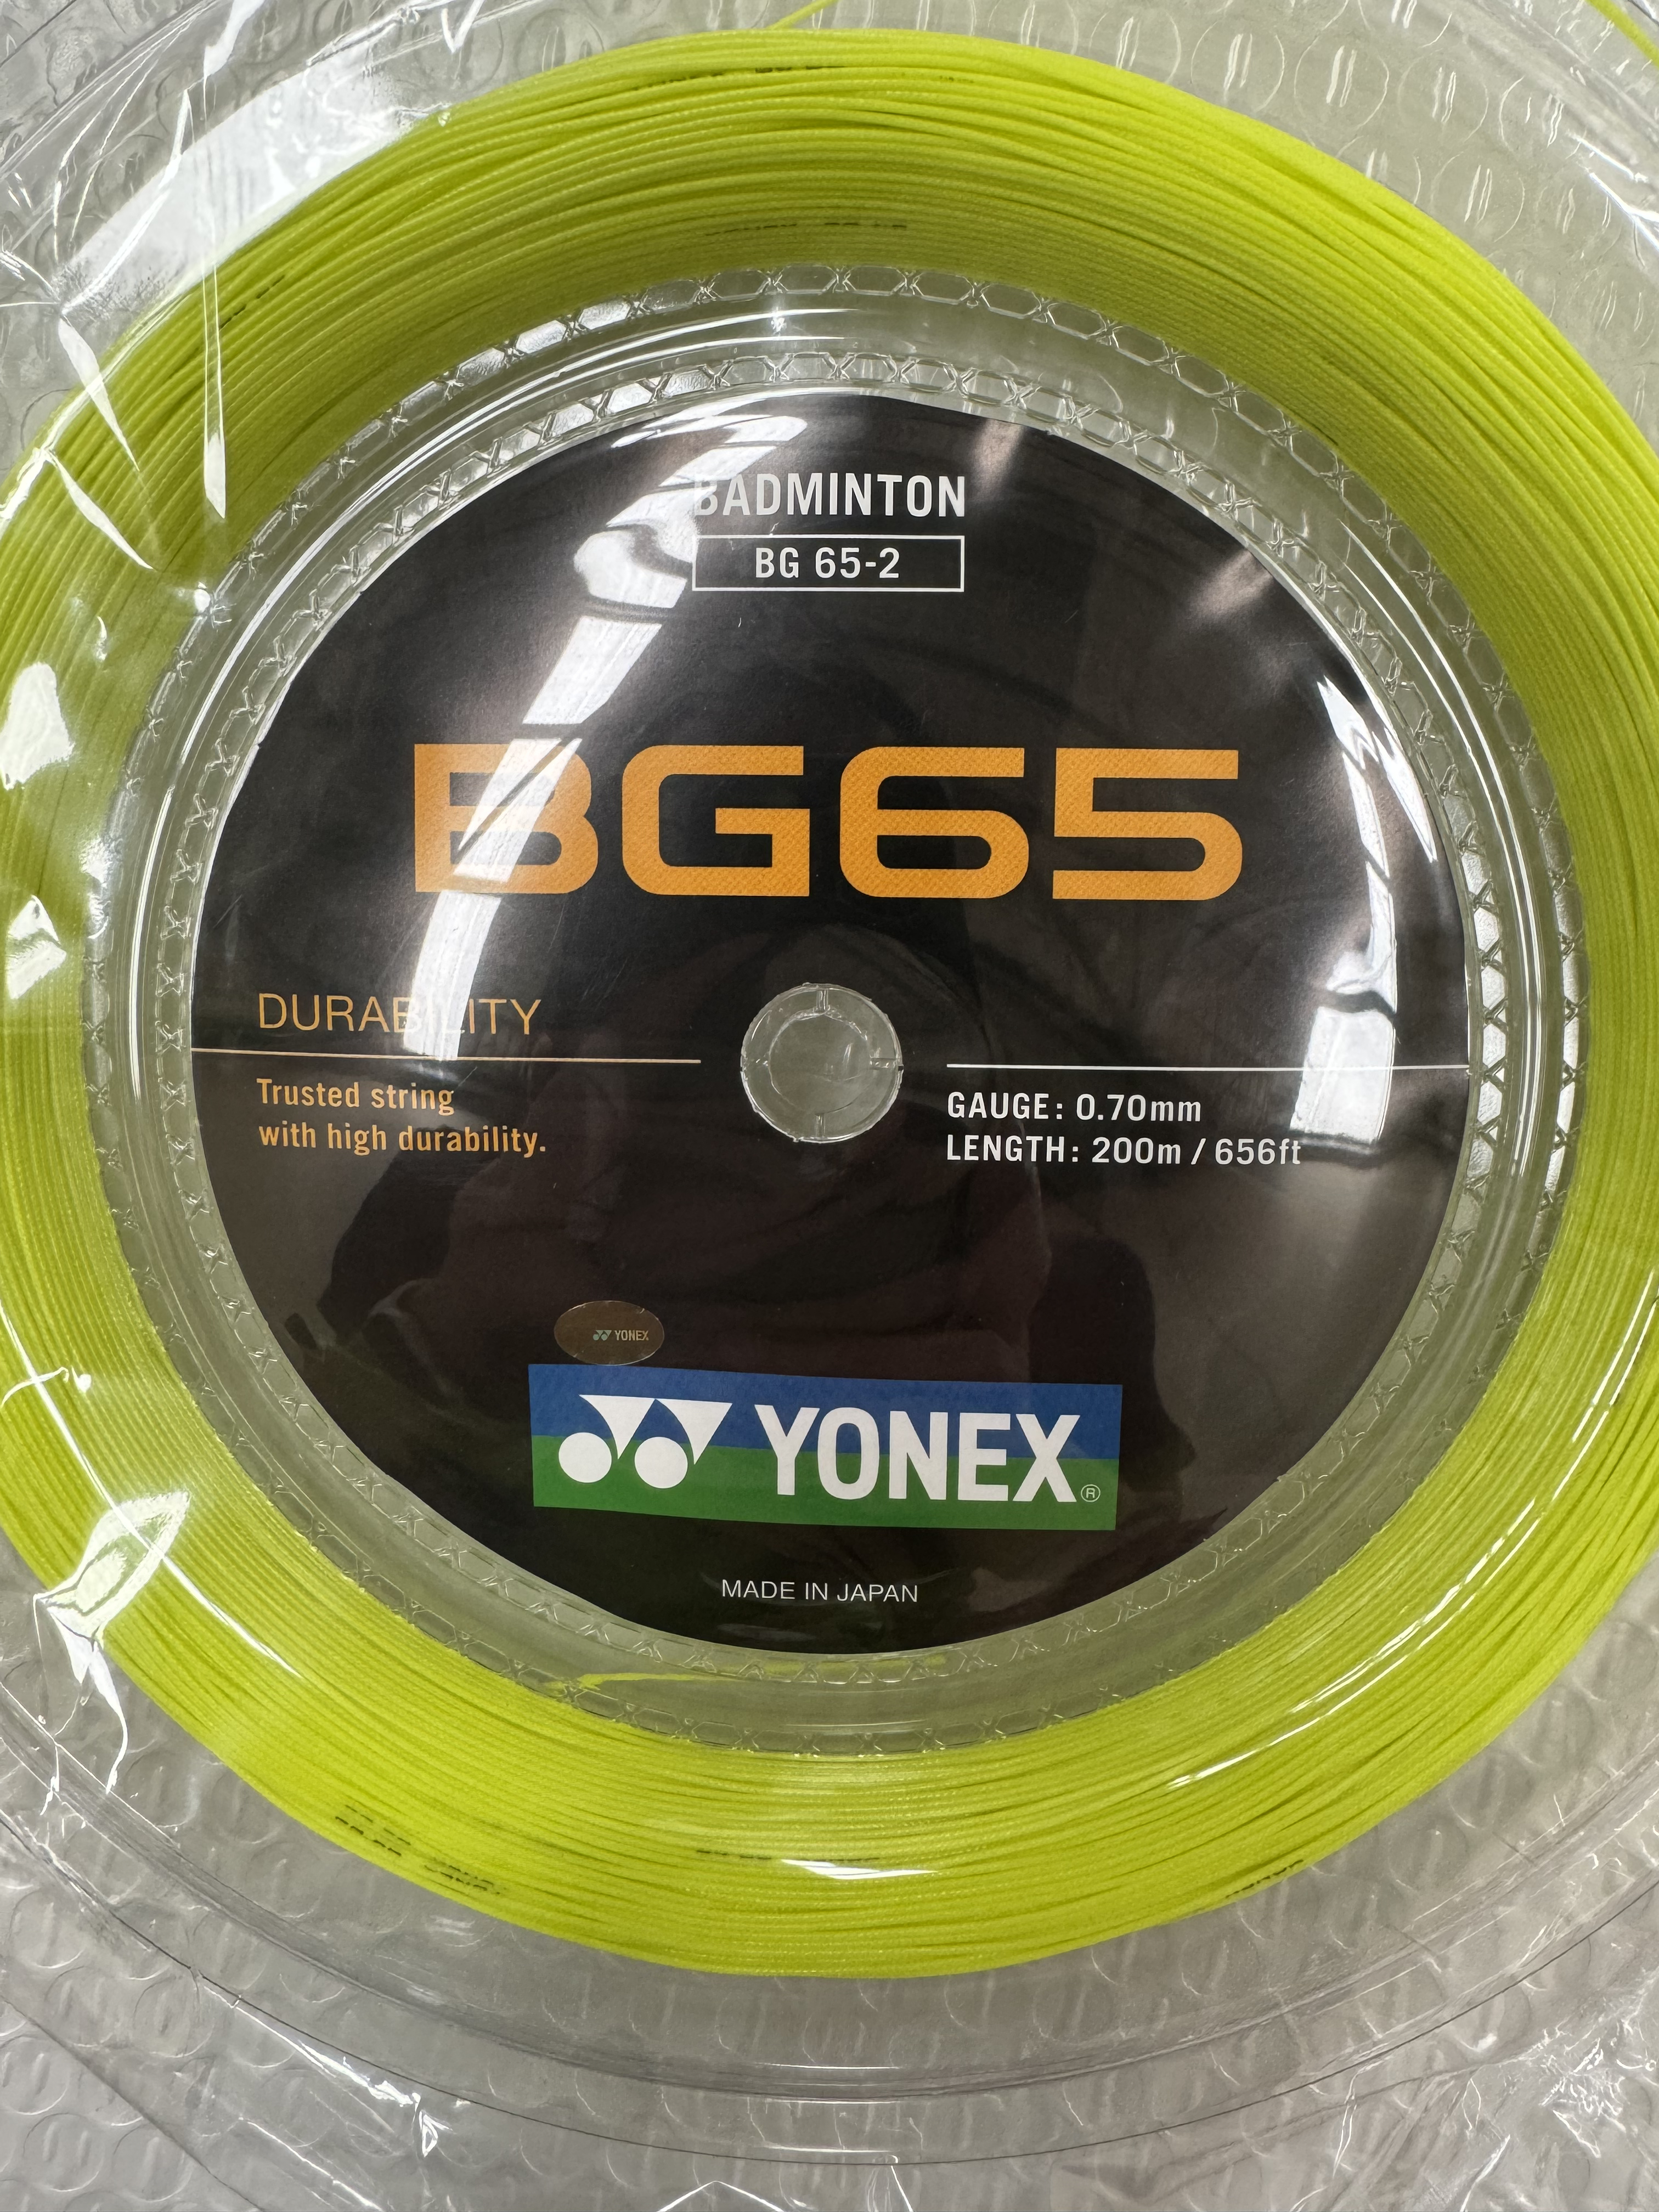 YONEX BG65 Badminton Coil String, 200m, More Durable, Yellow